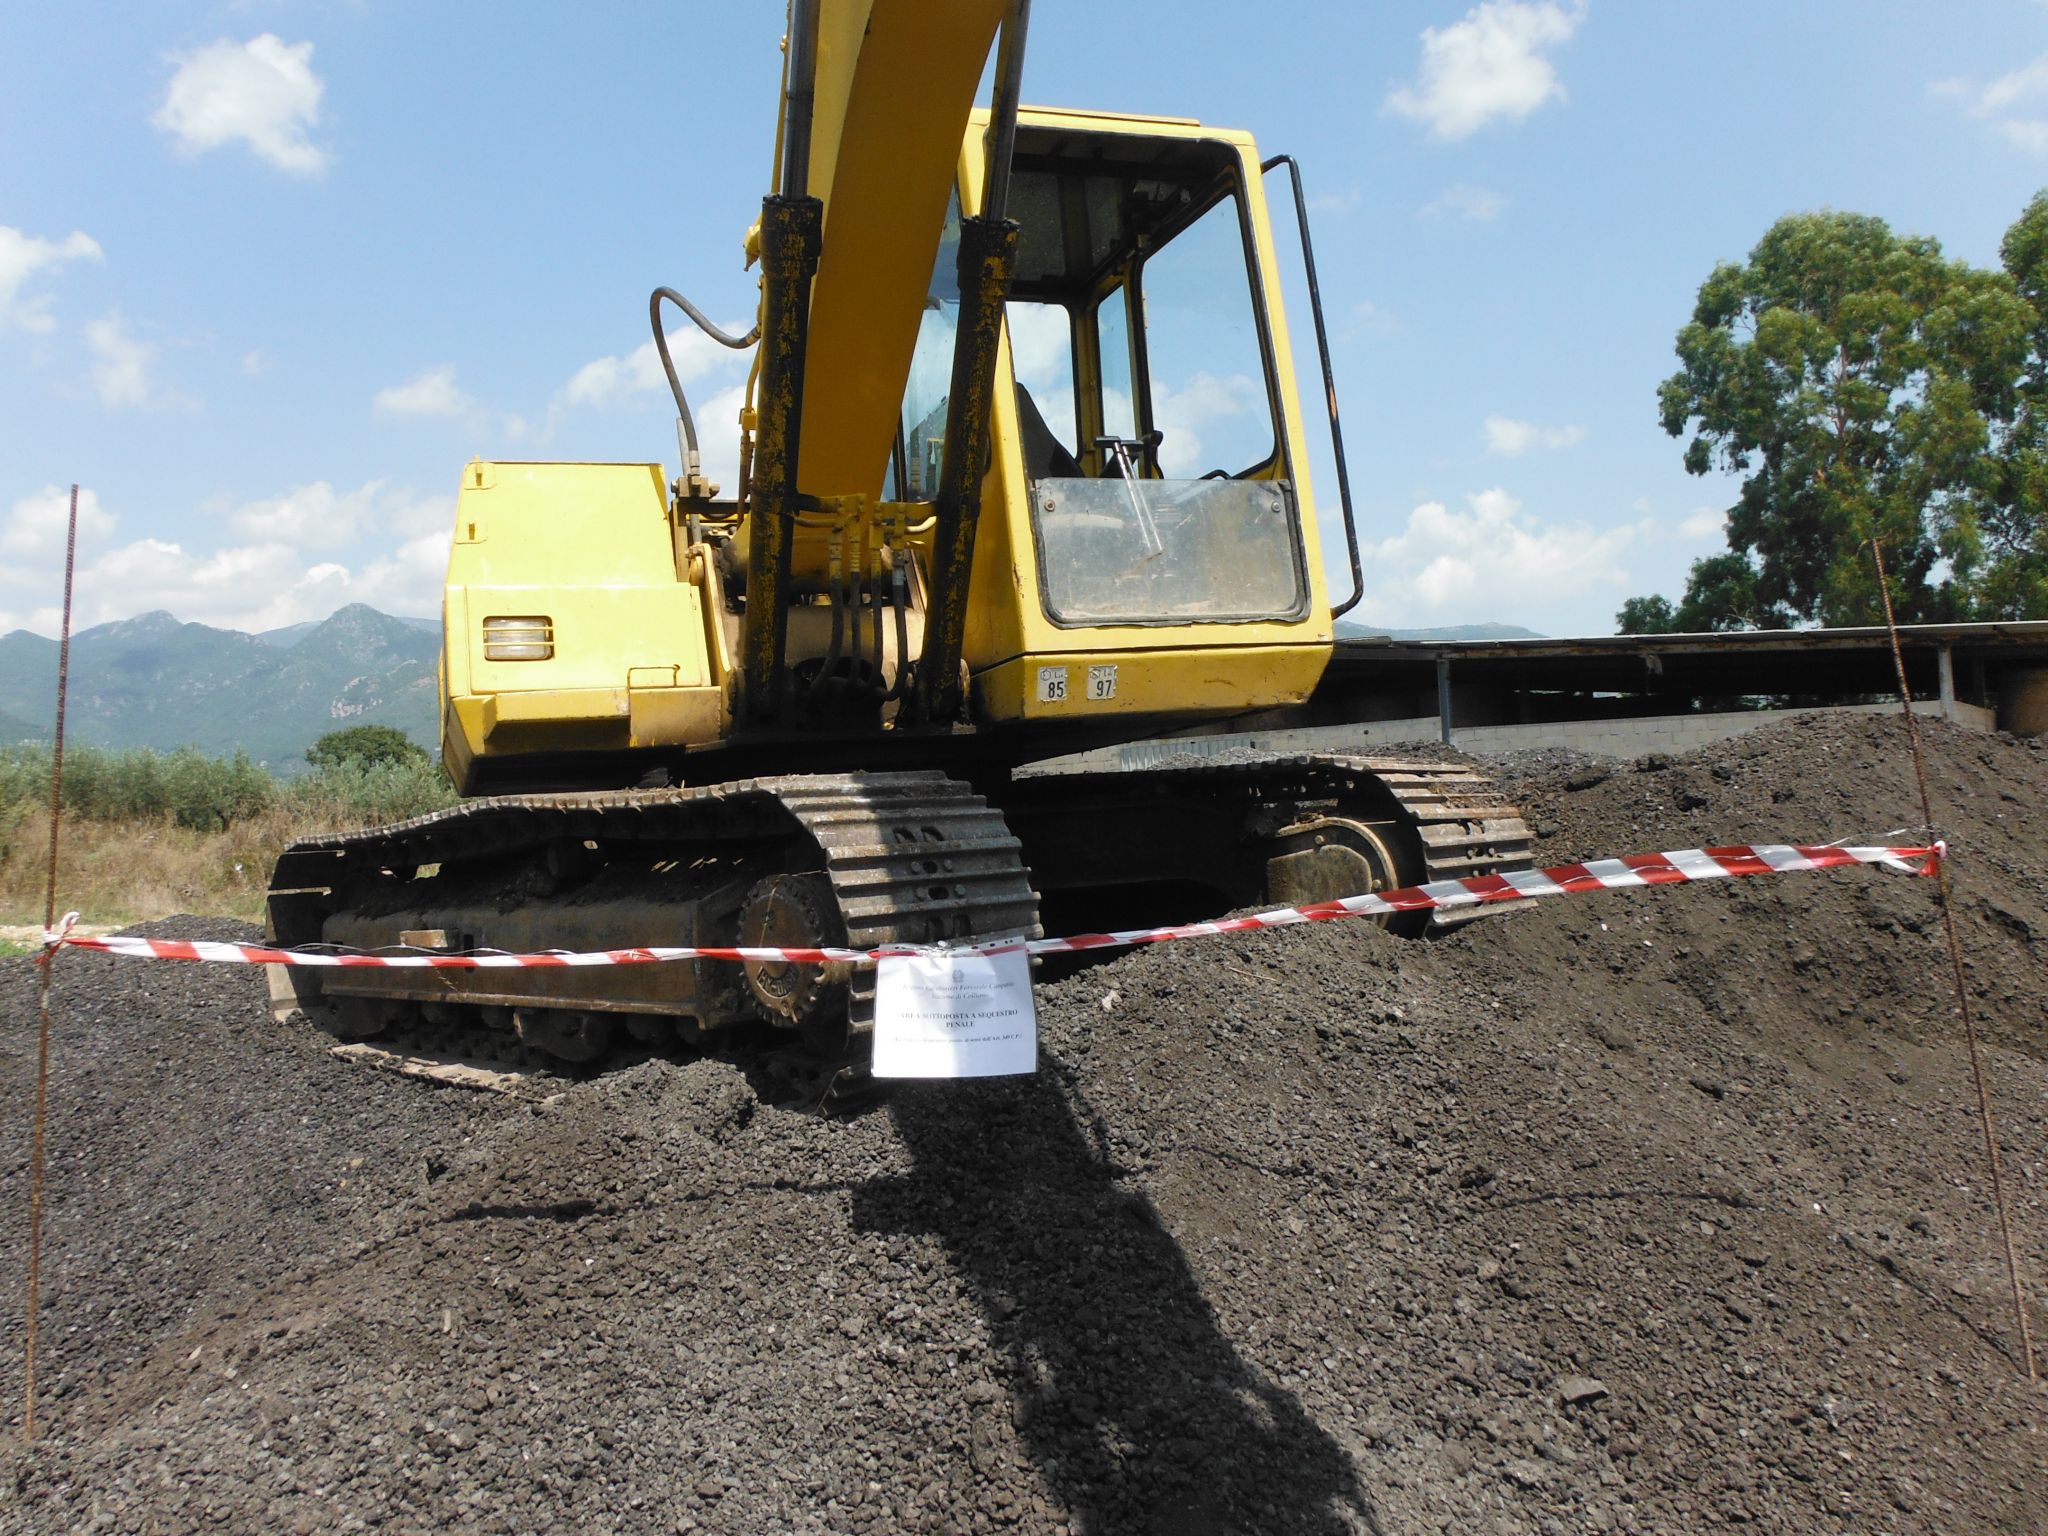 Sversavano asfalto in un’area agricola nel Salernitano: due denunciati